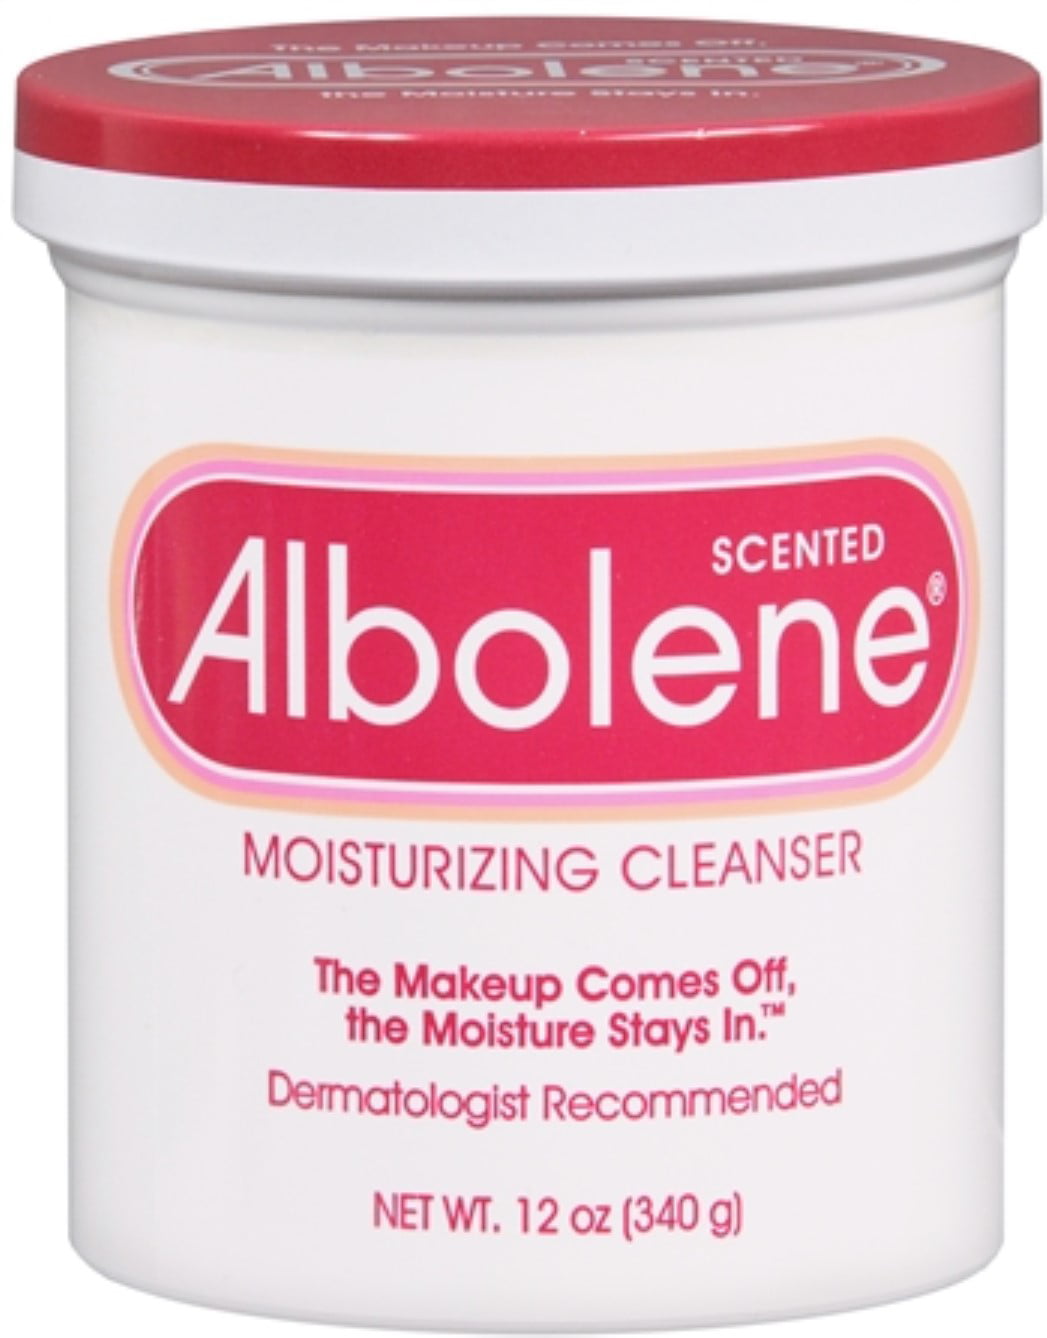 albolene moisturizing cleanser - wookey.com.